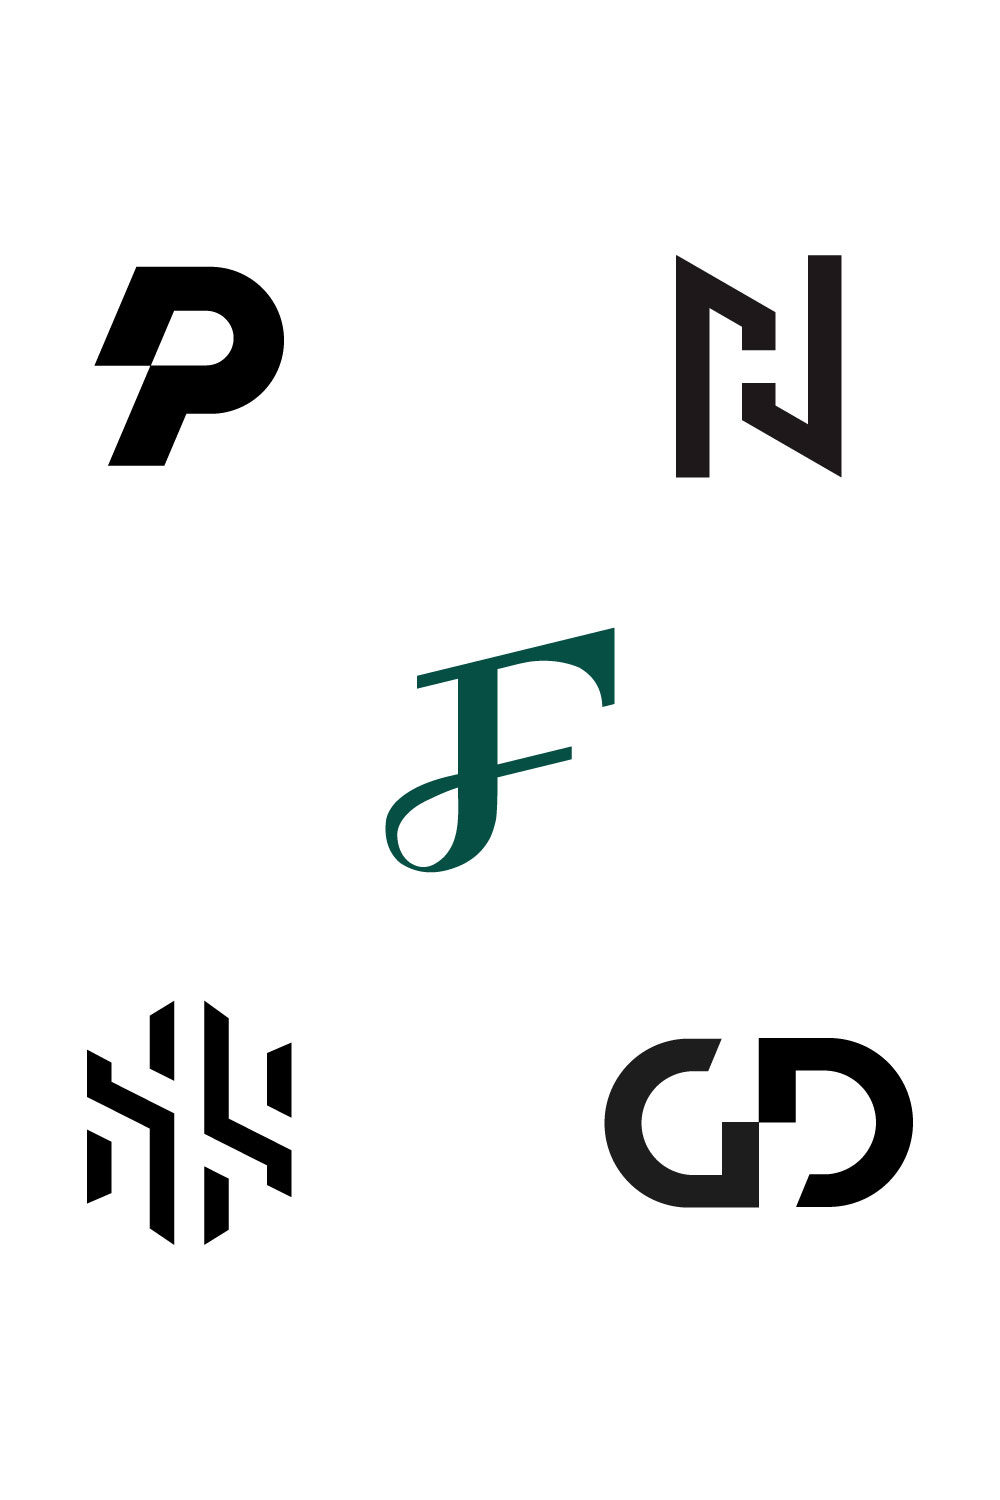 5 Word Mark Design Logos pinterest image.